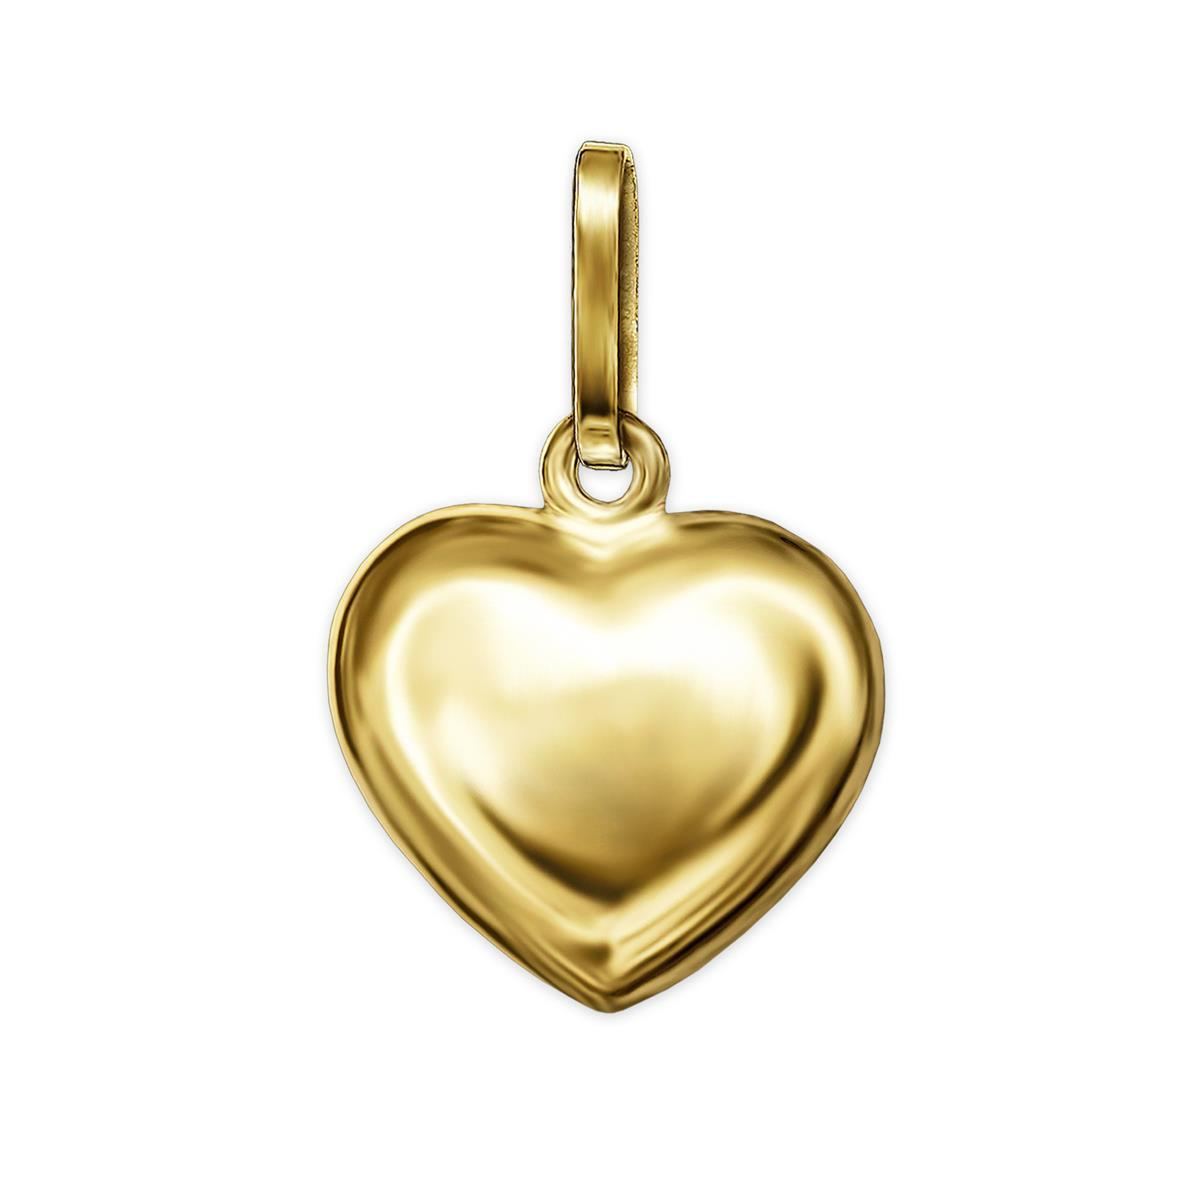 Goldener Anhänger Herz 10 mm schlicht leich gewölbt hochglänzend poliert STERLING SILBER 925 Gold-plattiert